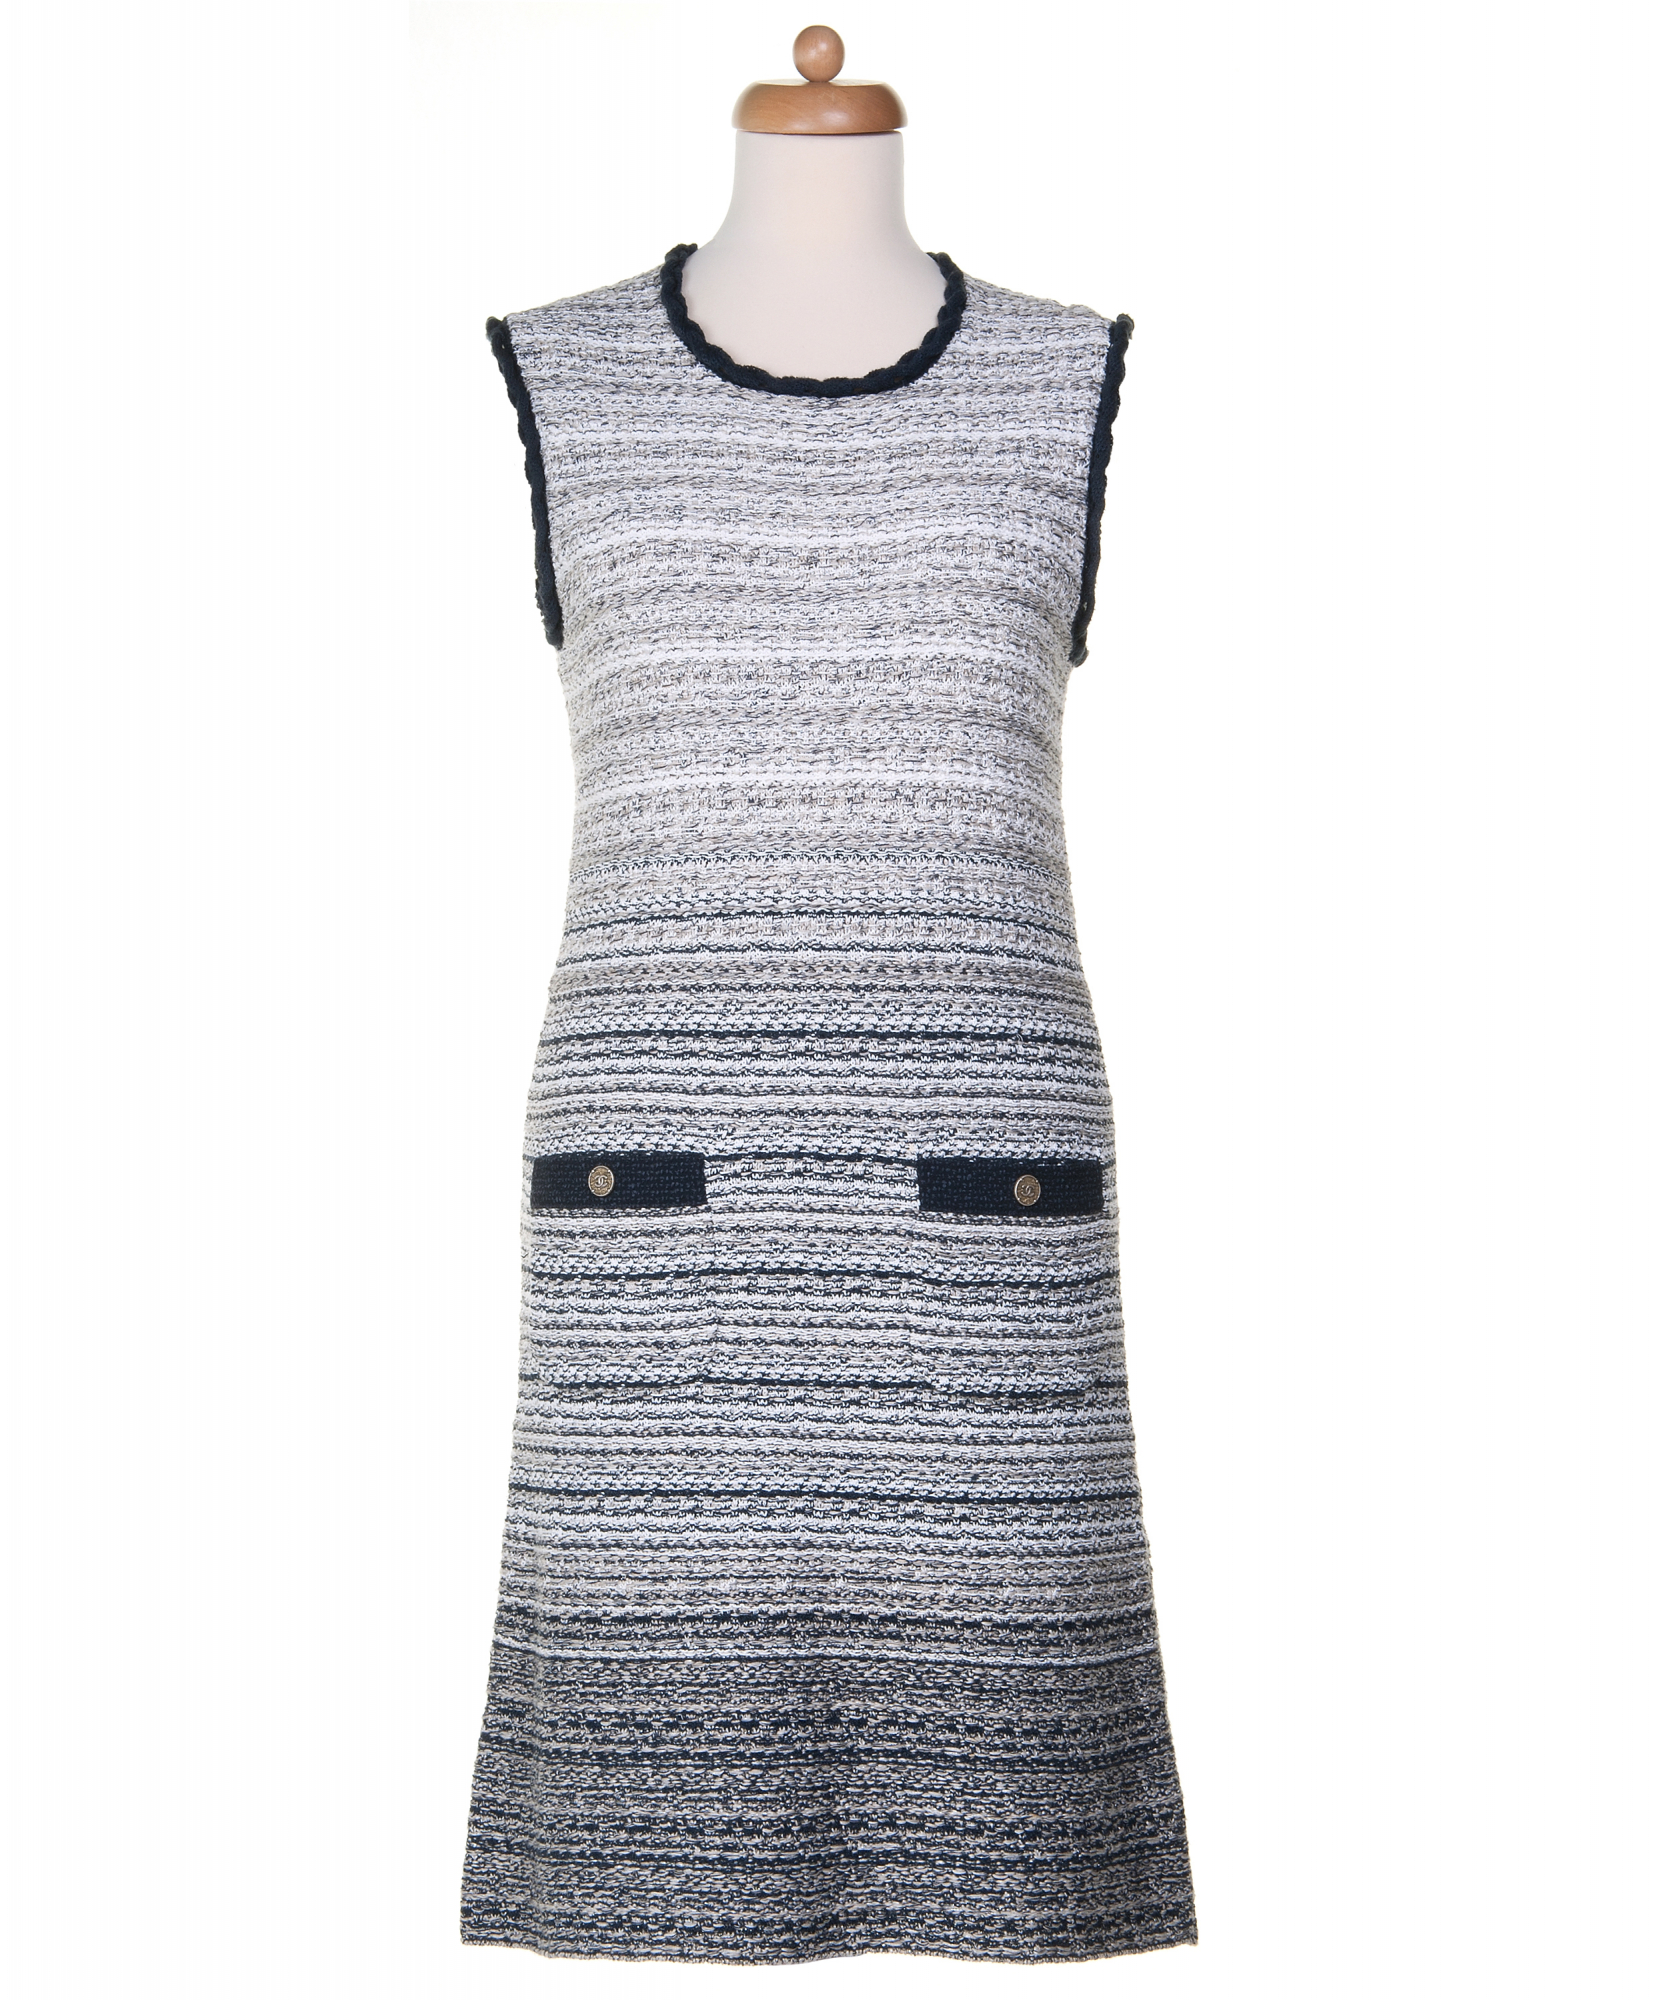 Chanel Sleeveless Knit Casual Dress 12P - Chanel